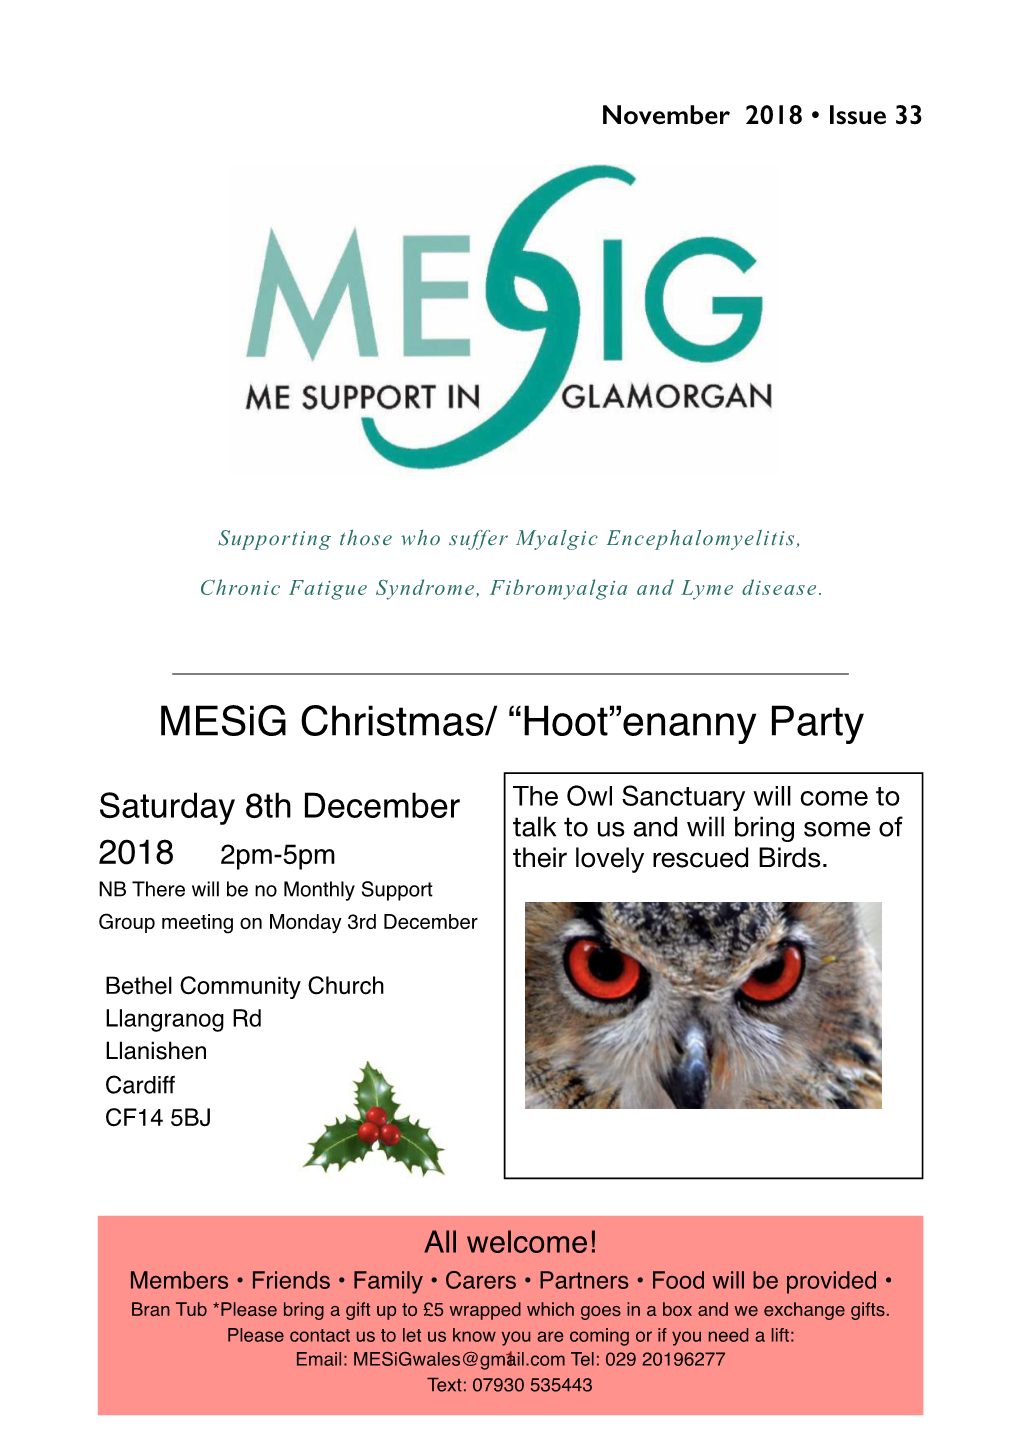 Mesig Christmas/ “Hoot”Enanny Party